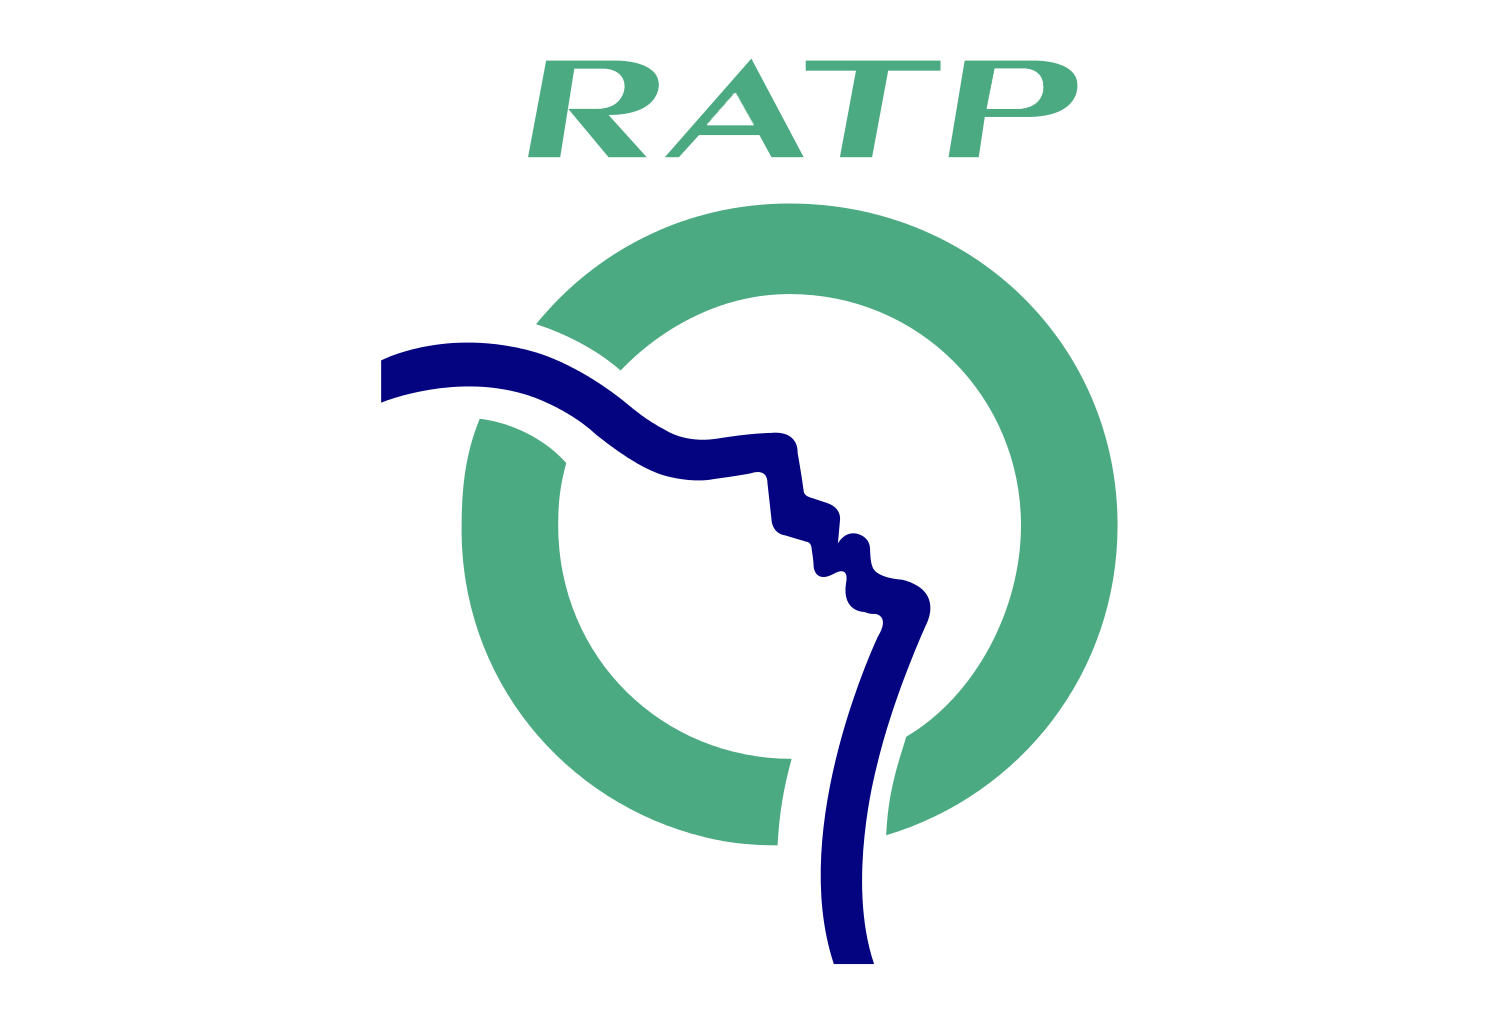 Logo ratp